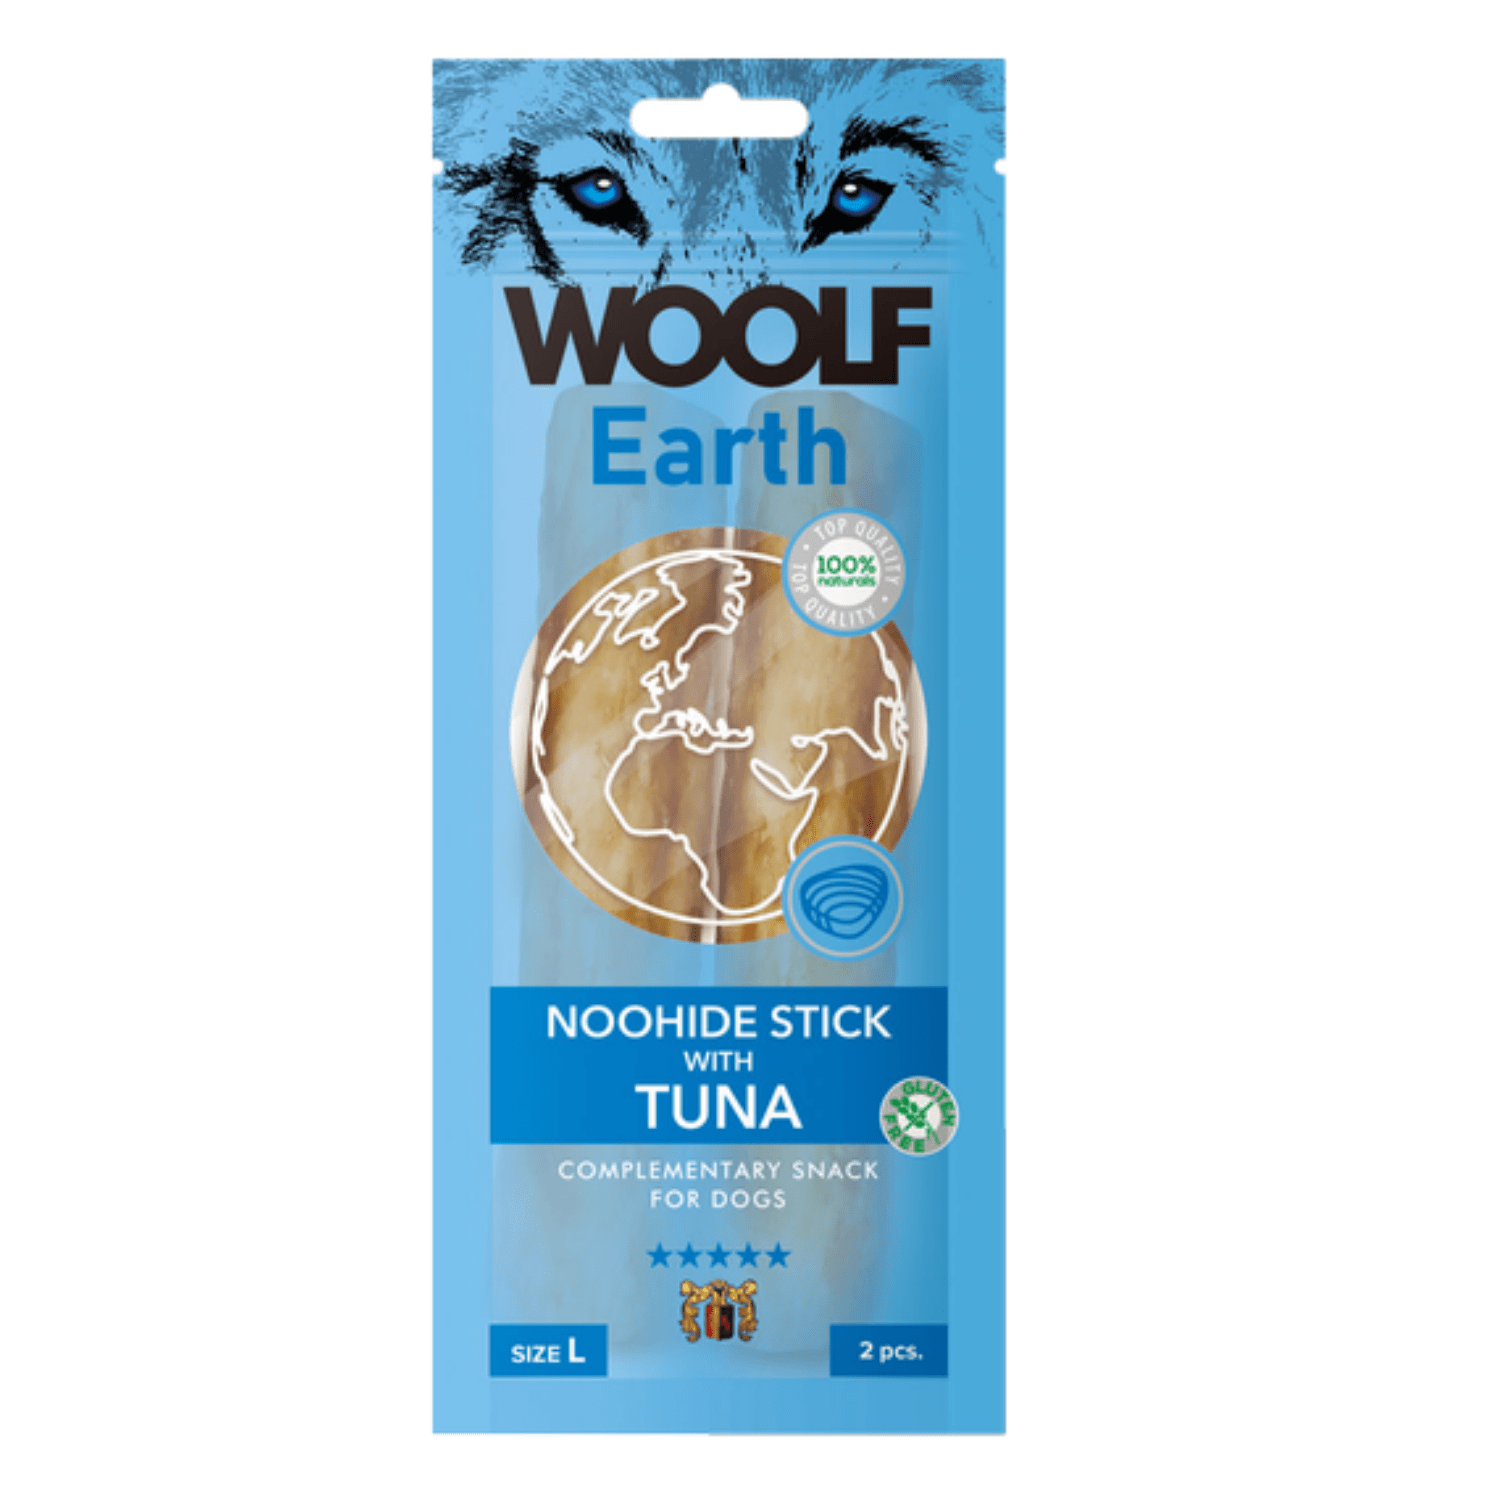 Woolf Earth Noohide Stick 85g dla dużych psów - tuńczyk